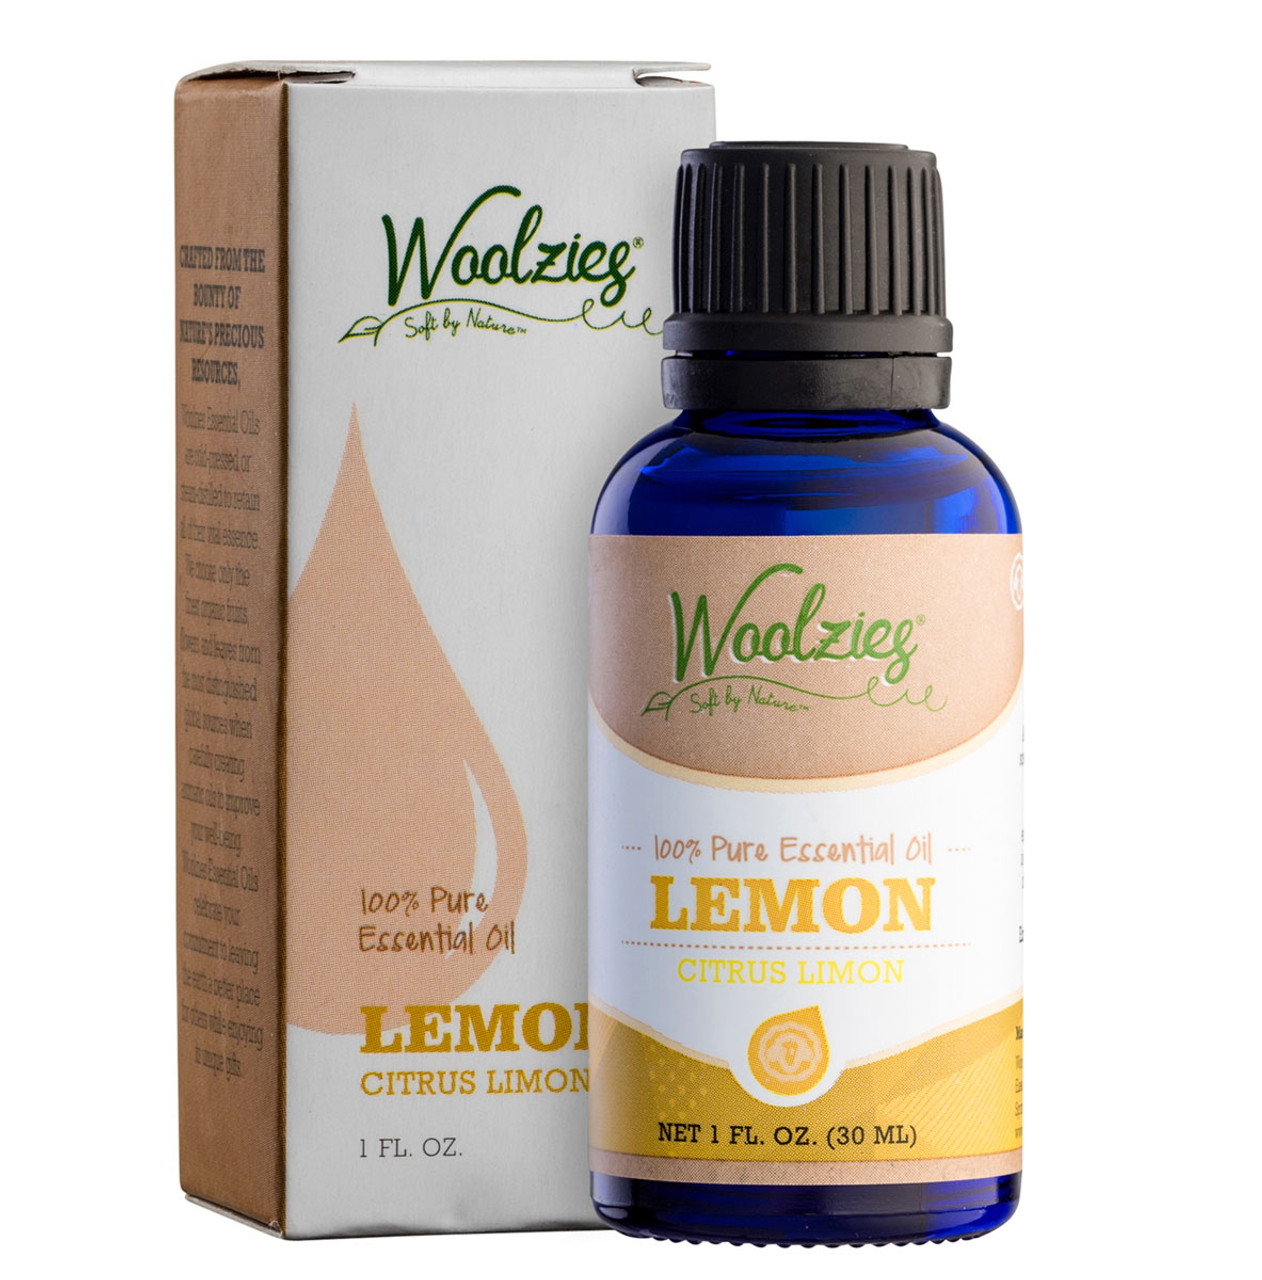 Woolzies 100% Pure Oil, Lemon - 1 fl oz